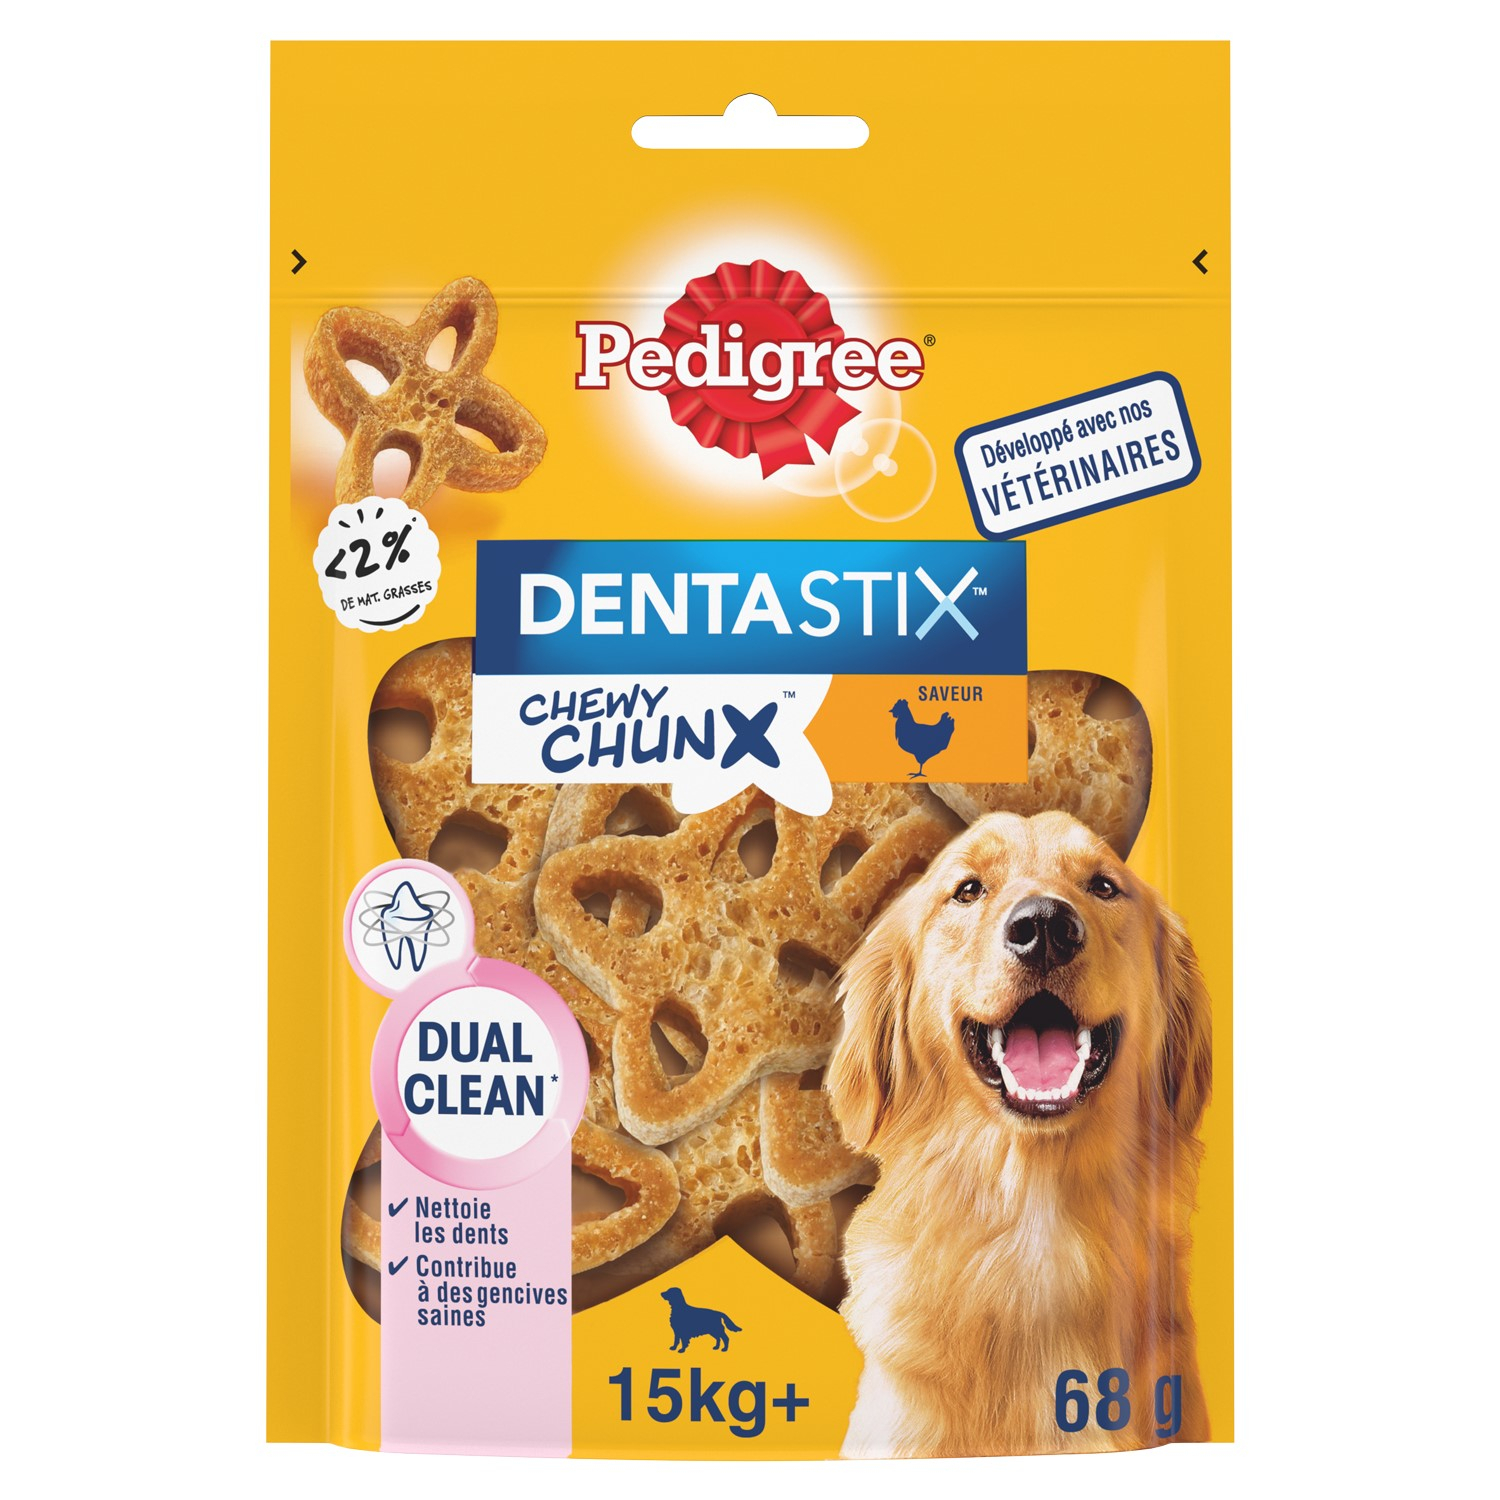 PEDIGREE Dentastix Chewy Chunx Snaks dentales para perros grandes con Pollo